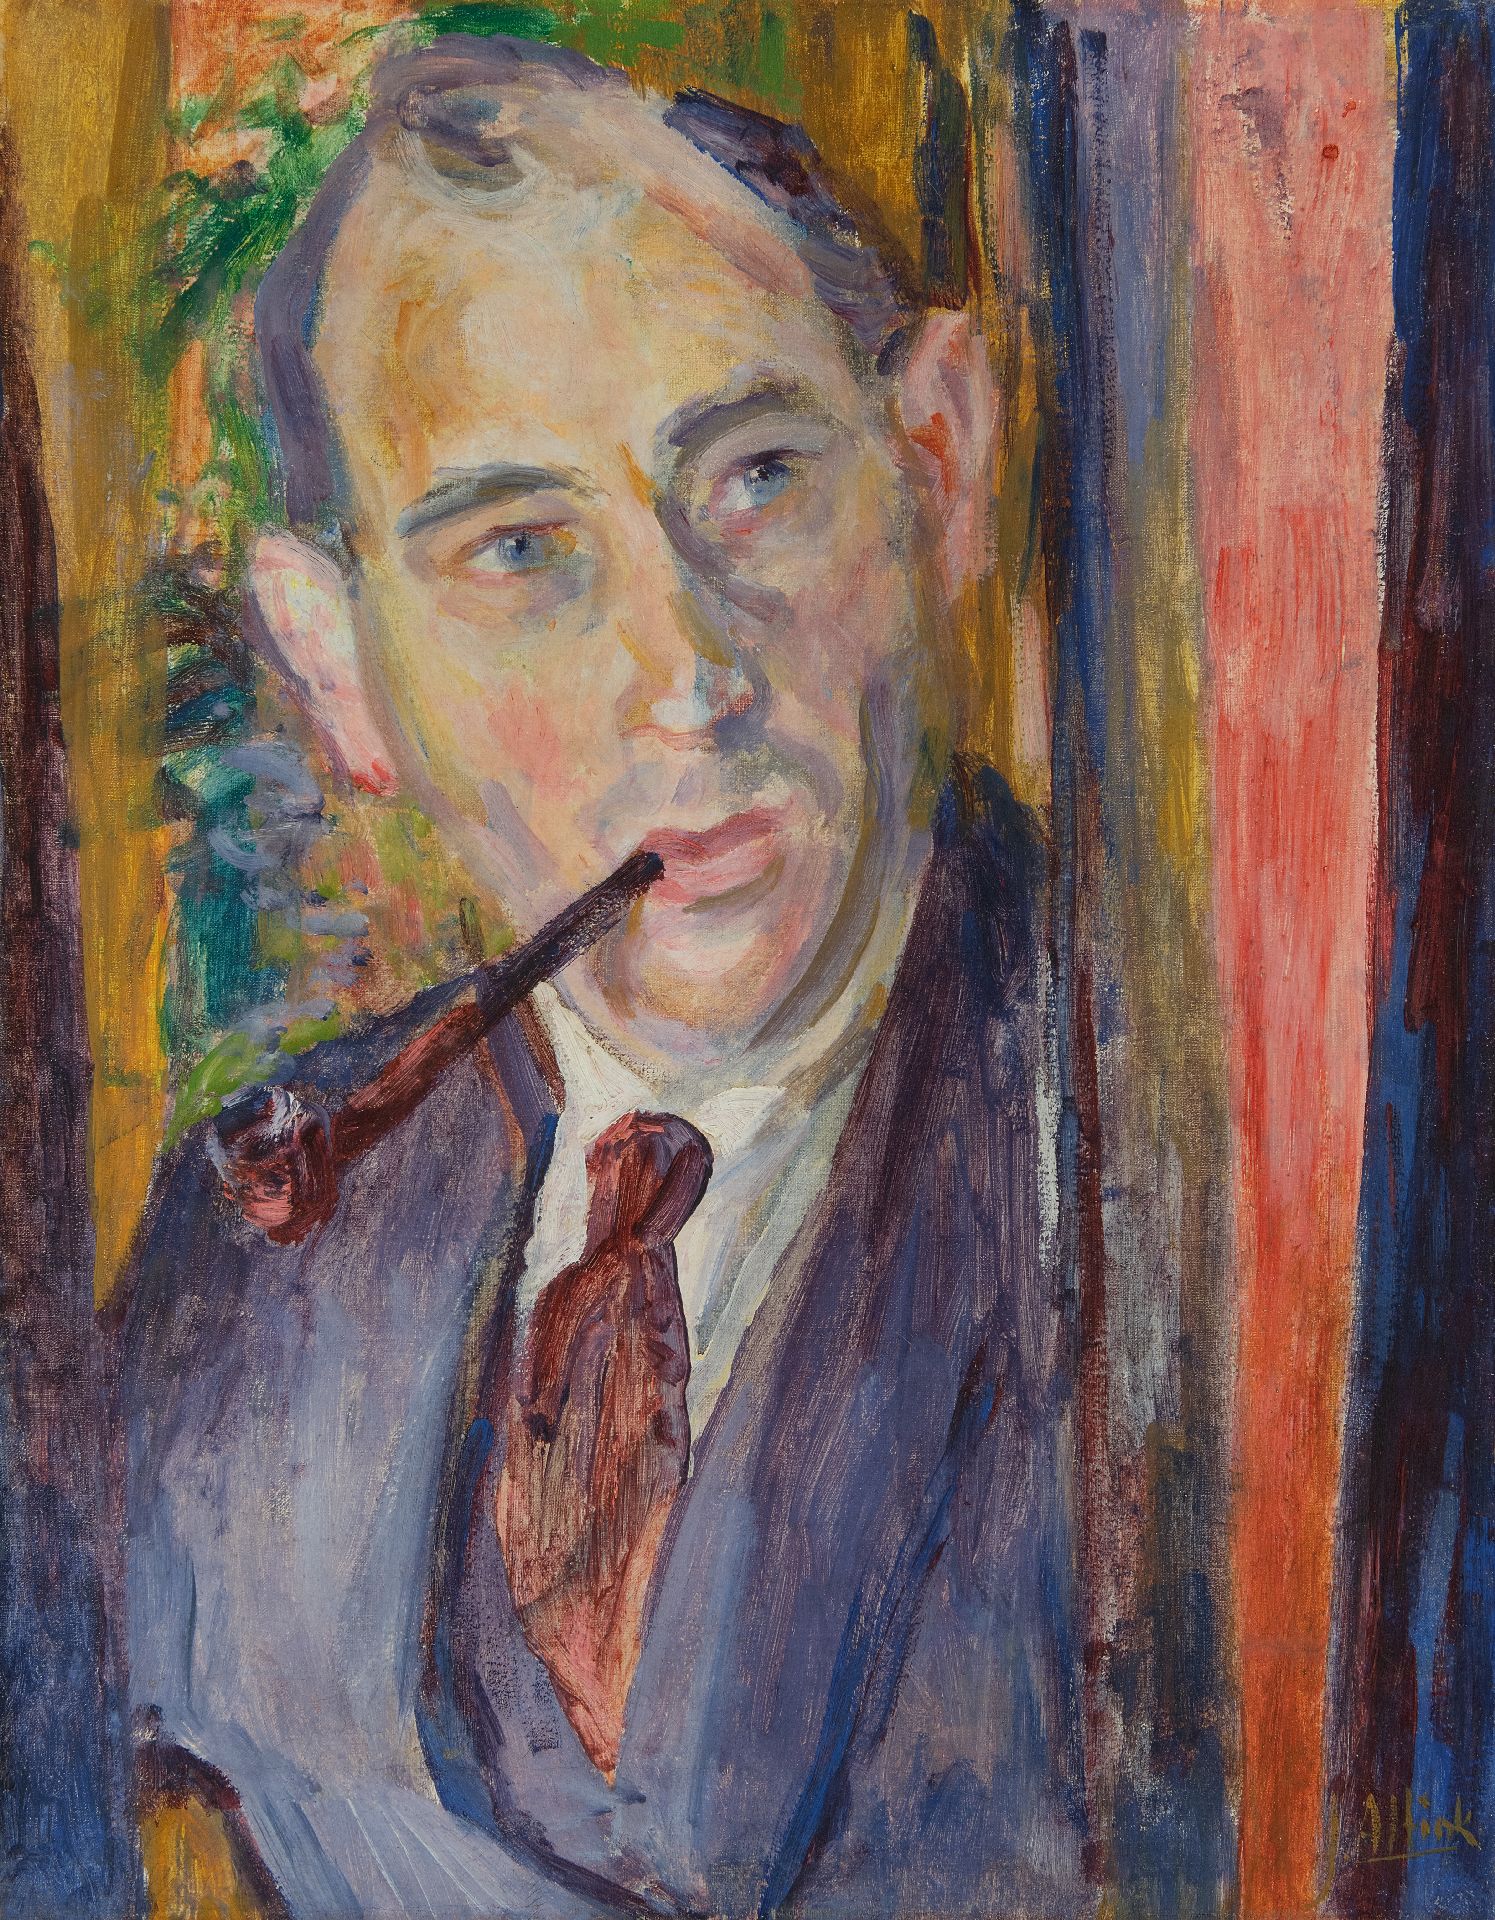 Portrait of artist, painter, watercolourist and draughtsman Jan Altink